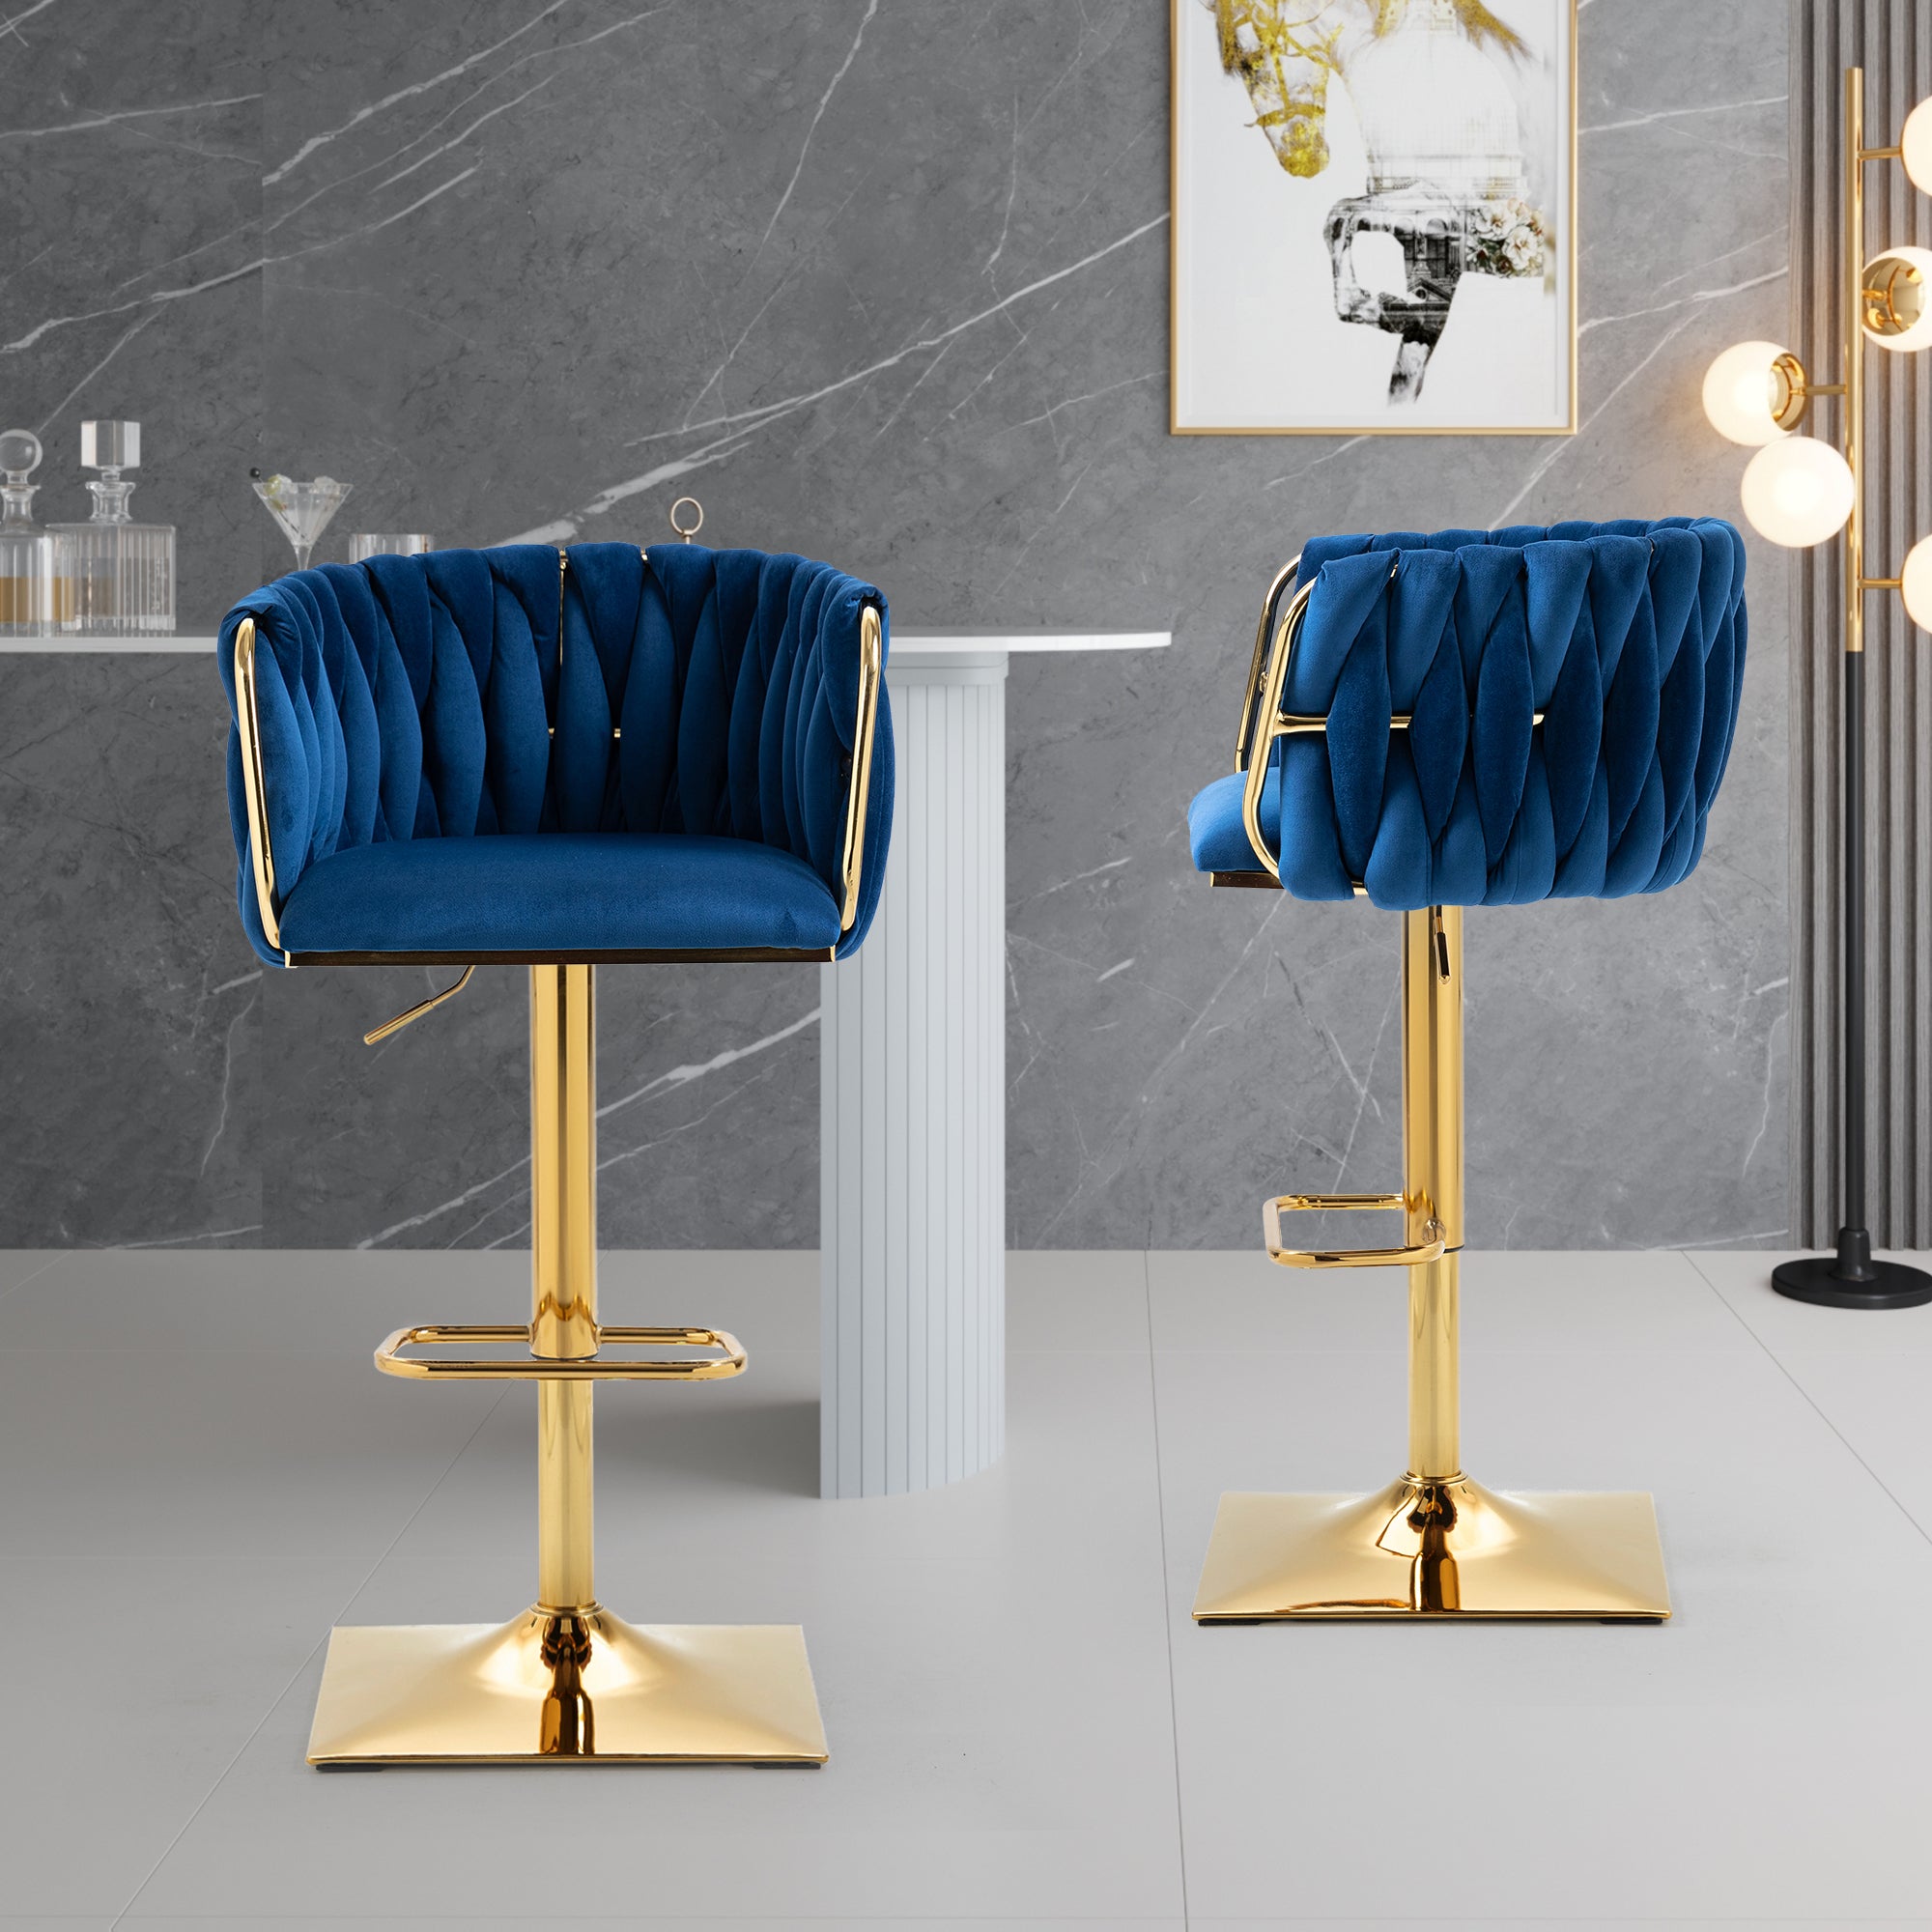 Set of 2 Luxury blue Velvet Modern Swivel Adjustable Height Barstools with Gold finish legs